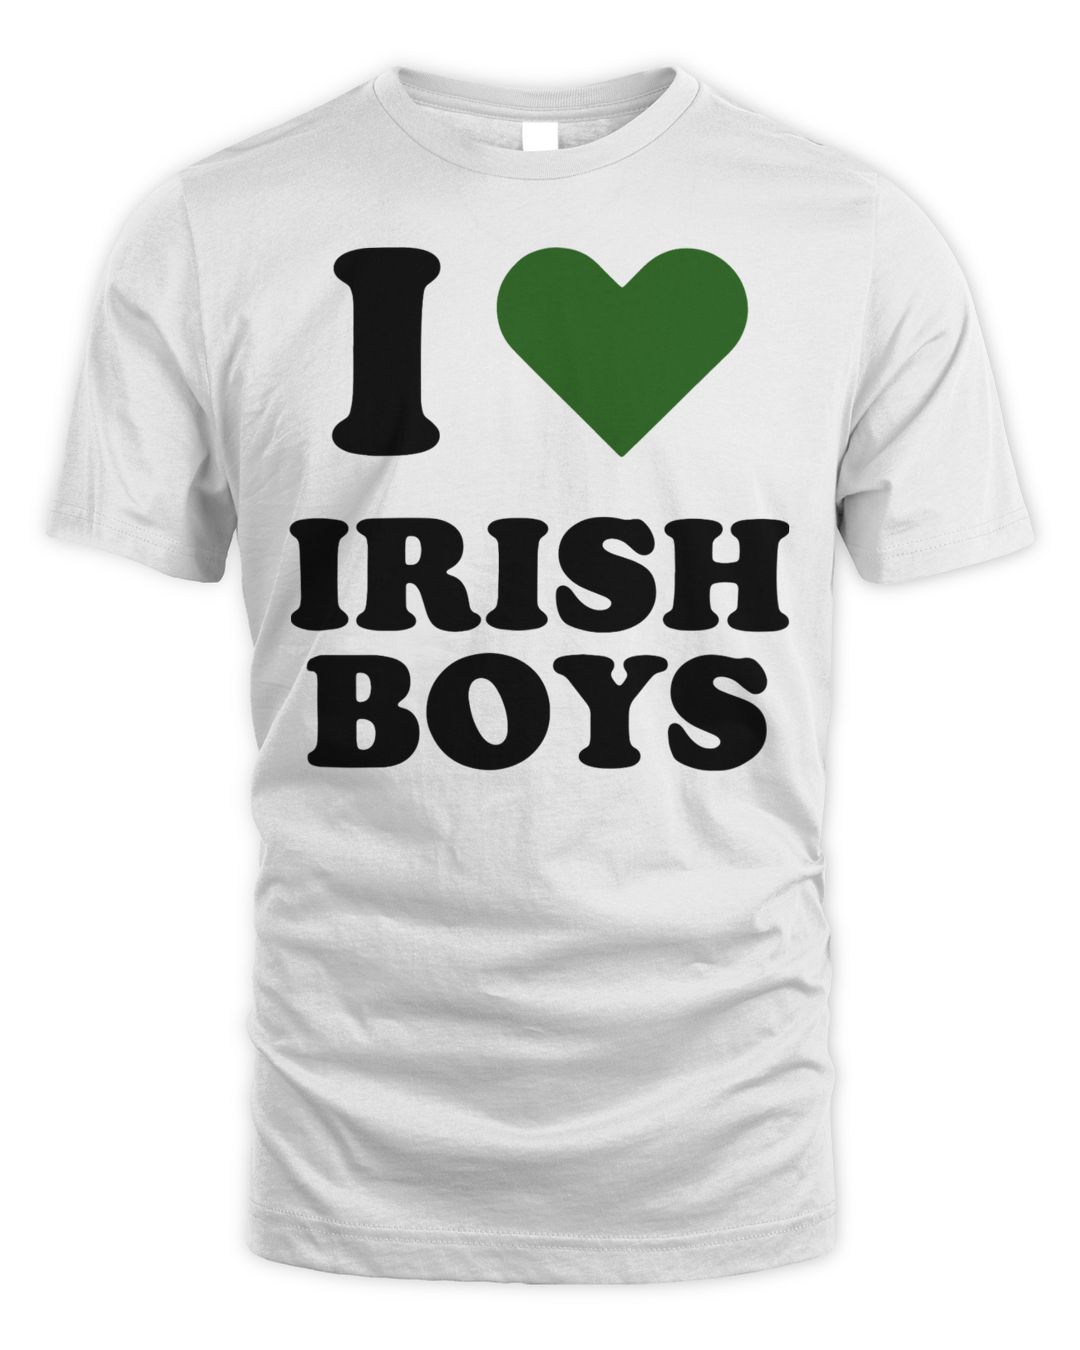 Official I love irish boys T-shirt